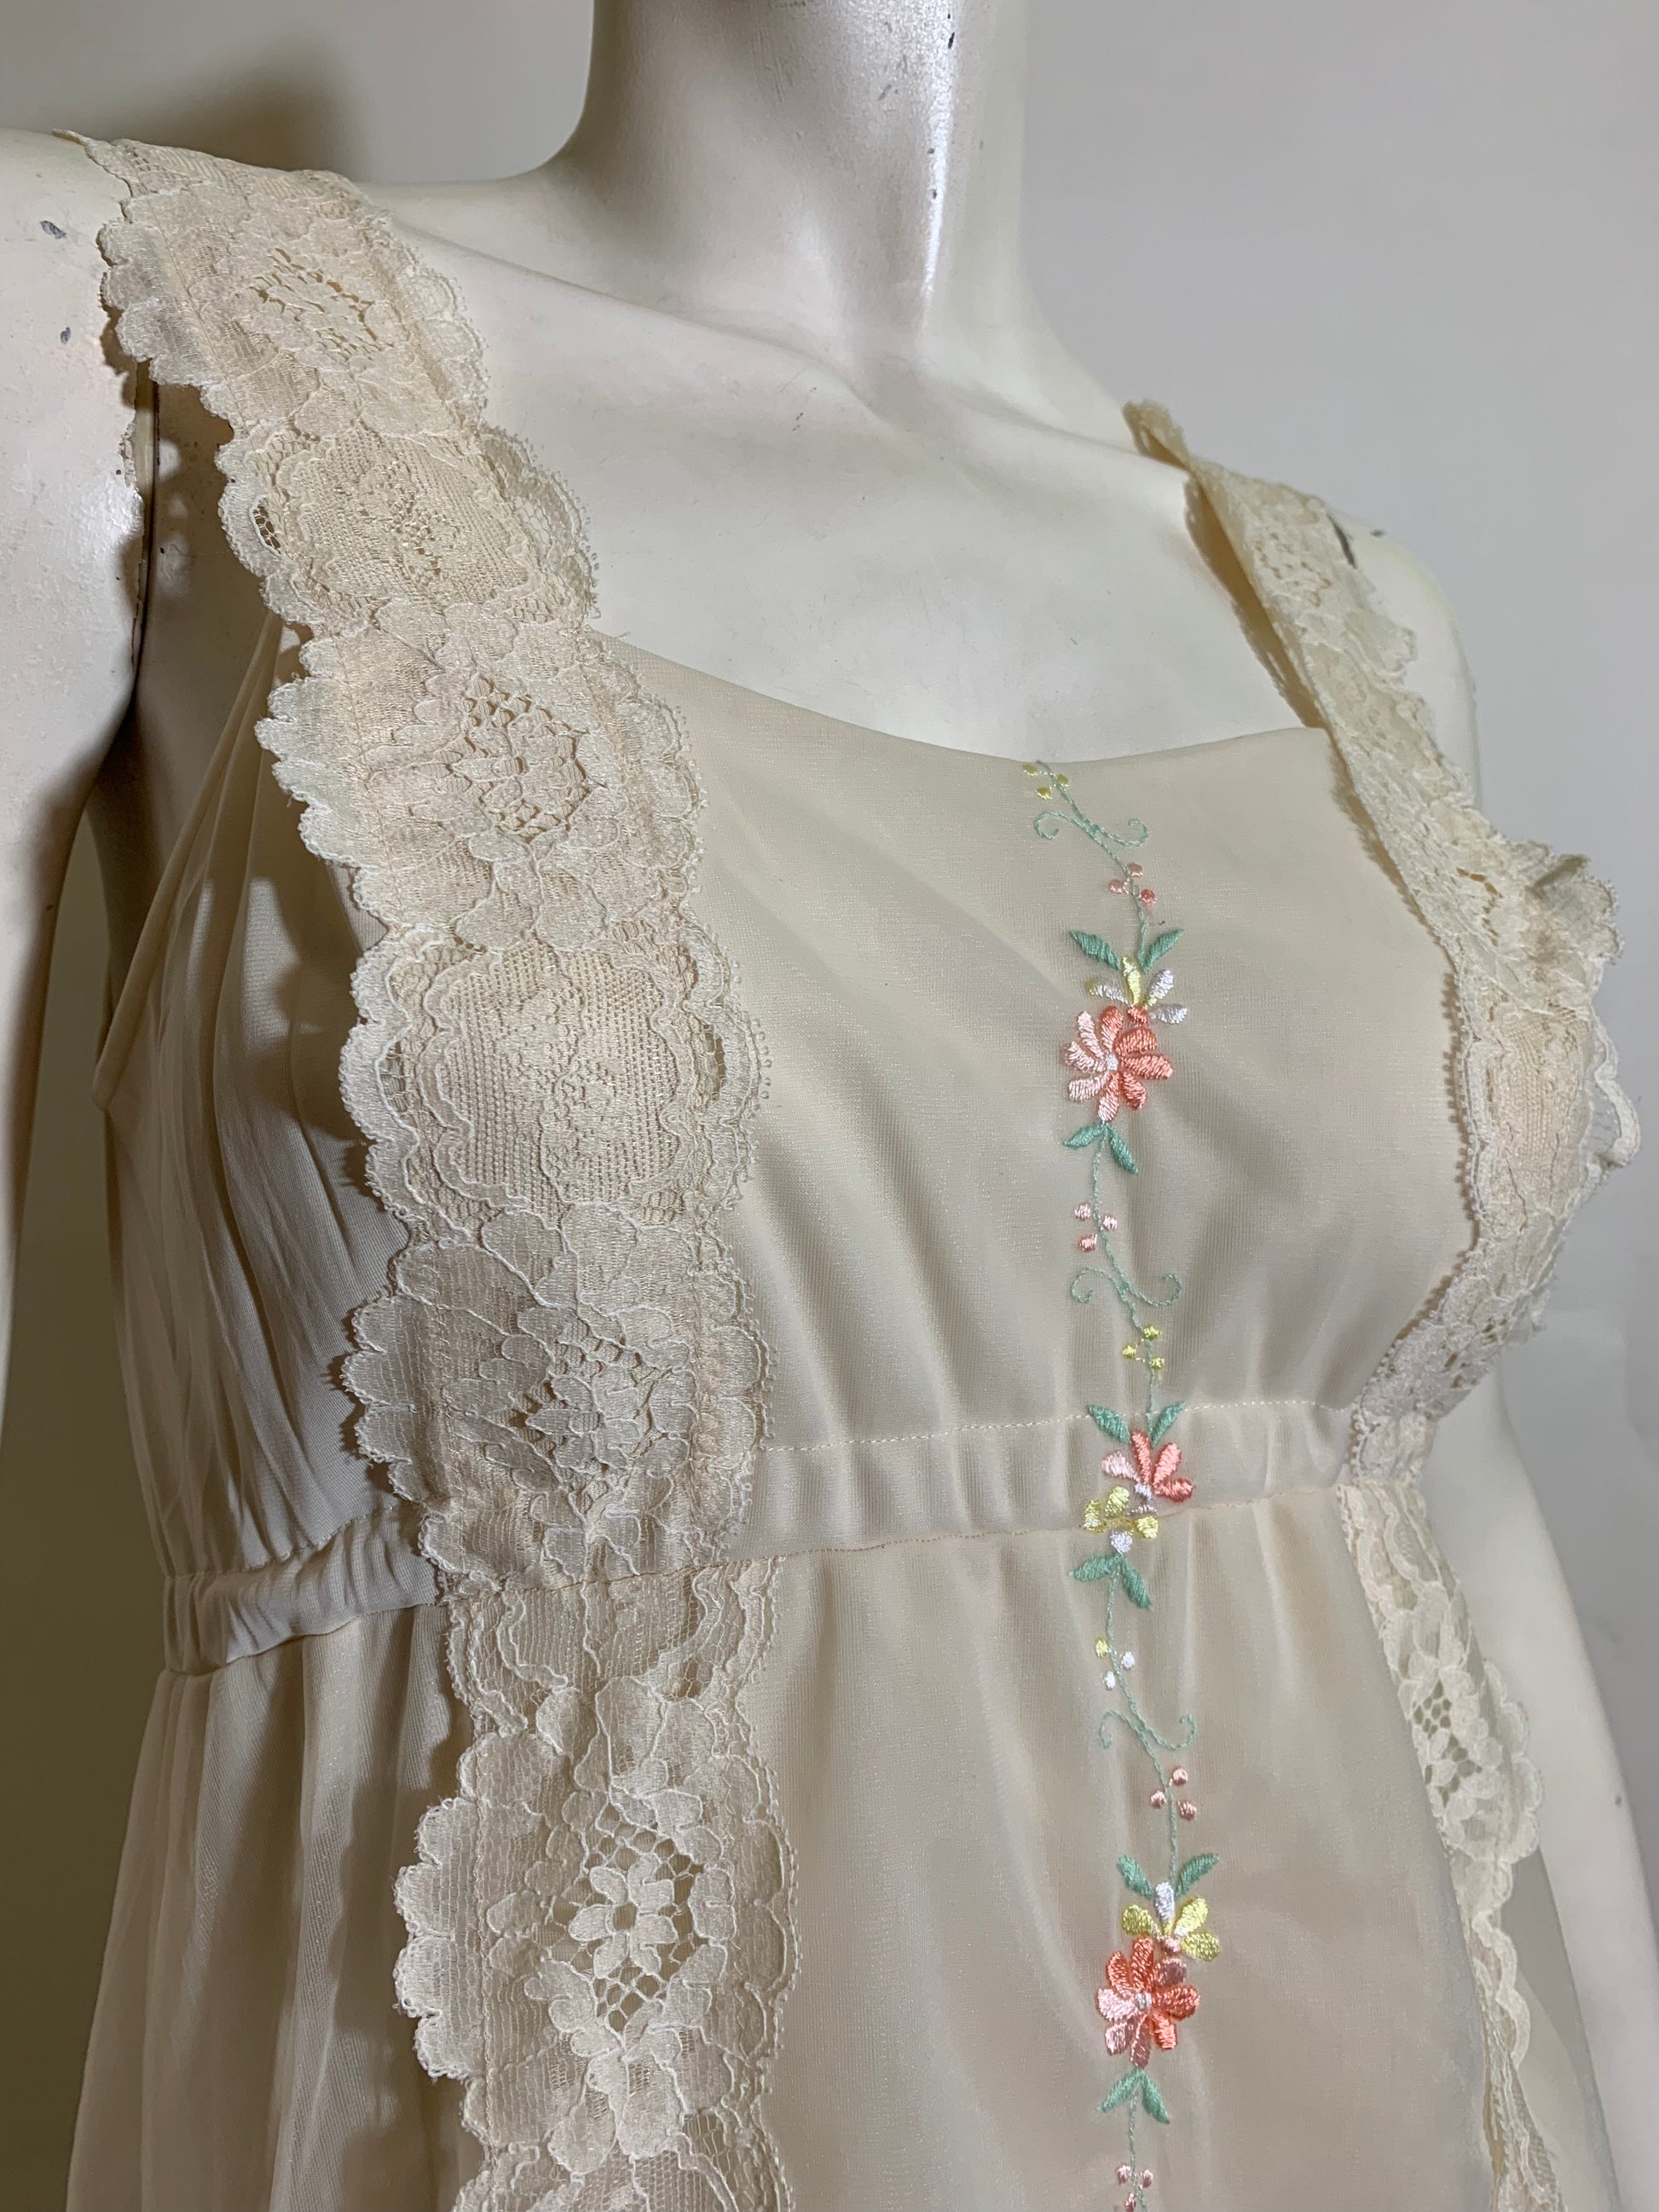 Peach Silk Jersey Bandeau Style Bra circa 1920s – Dorothea's